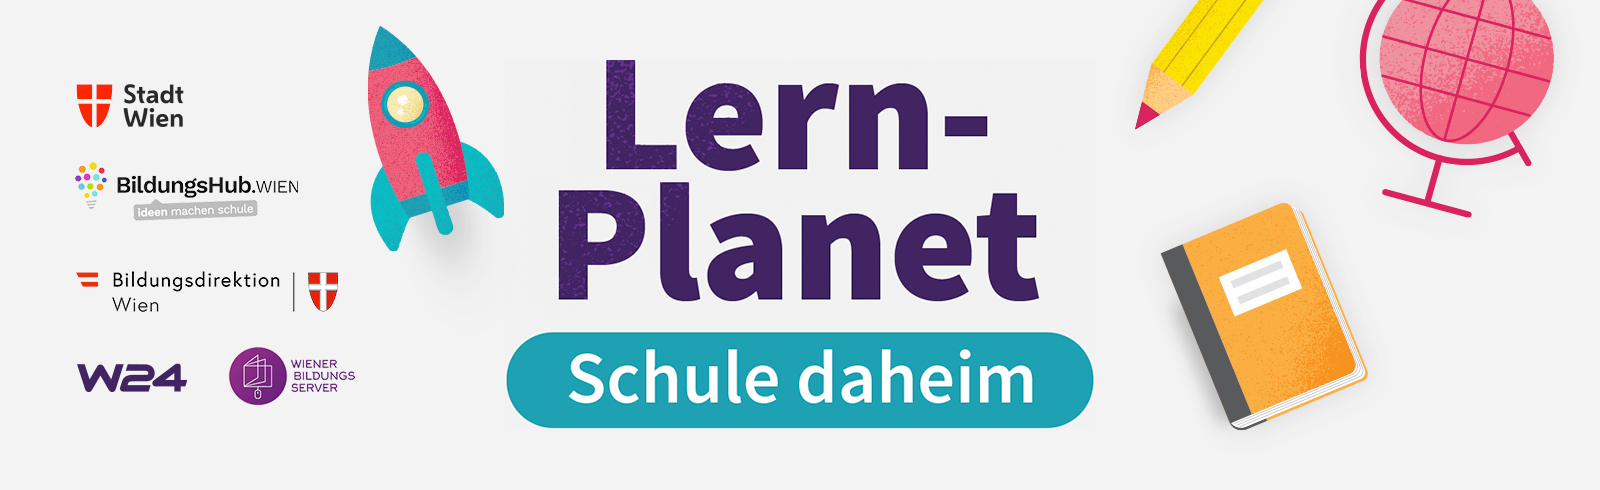 Lern-Planet